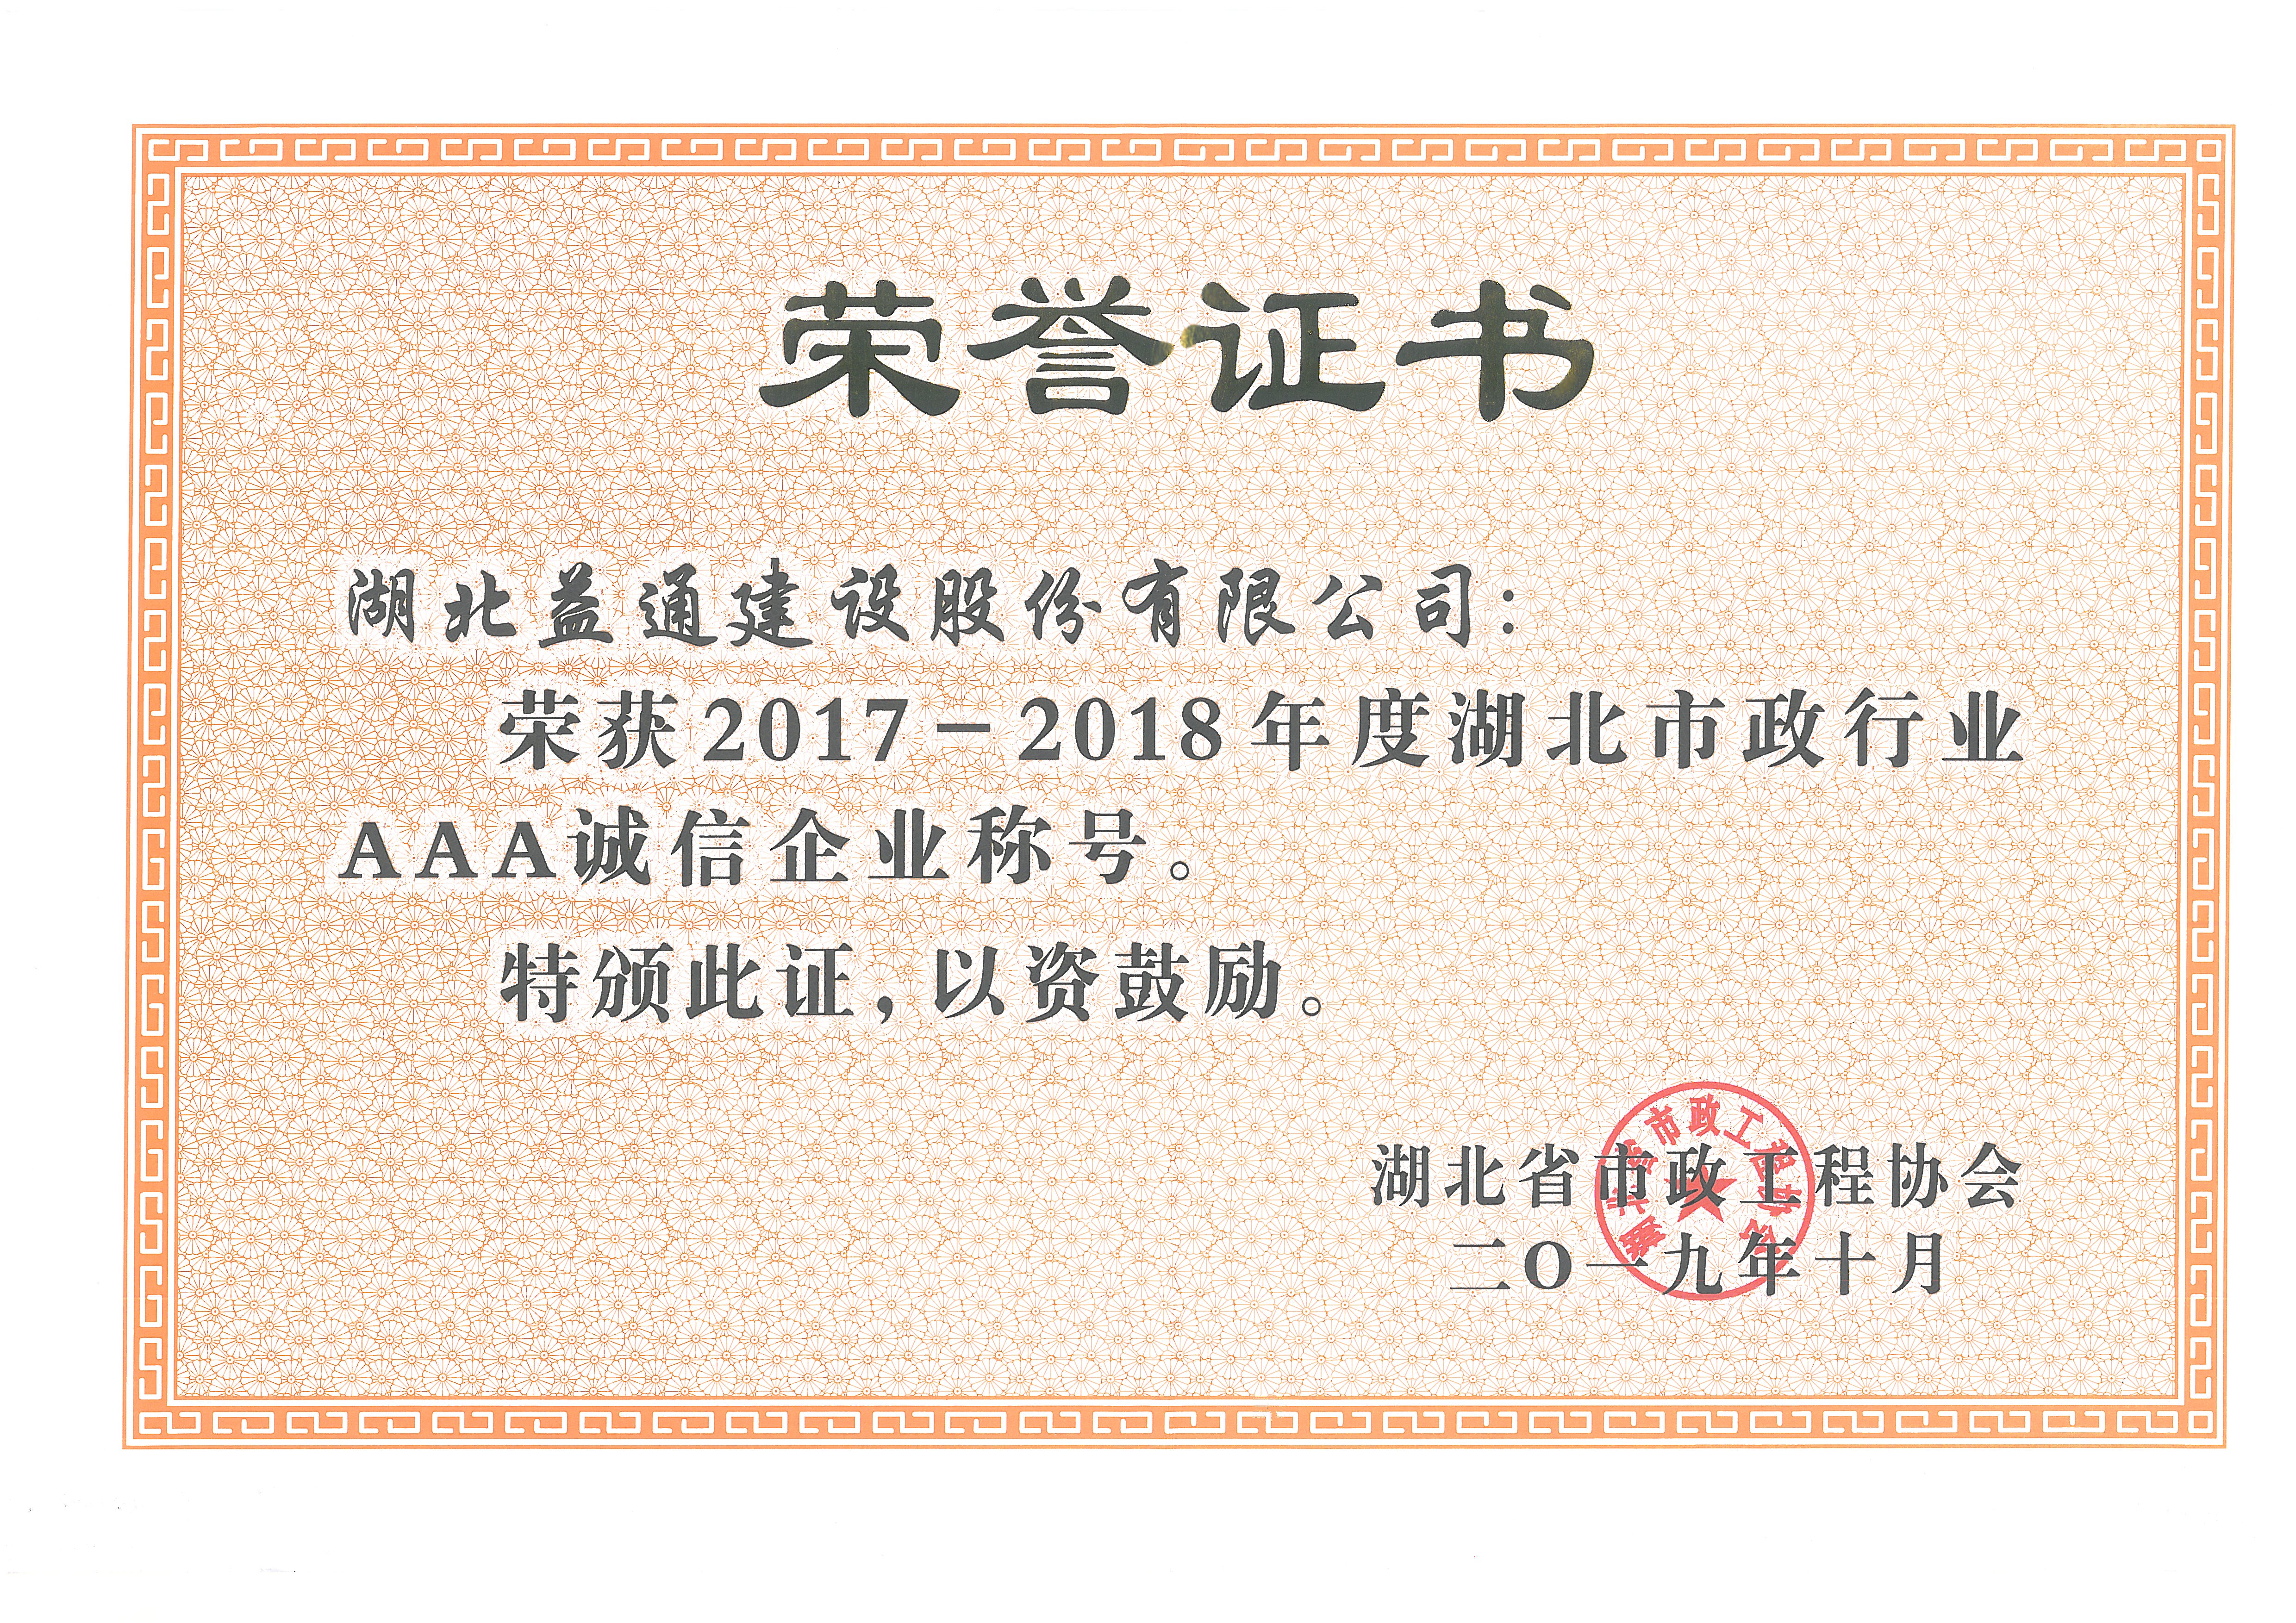 AAA誠信企業省級榮譽